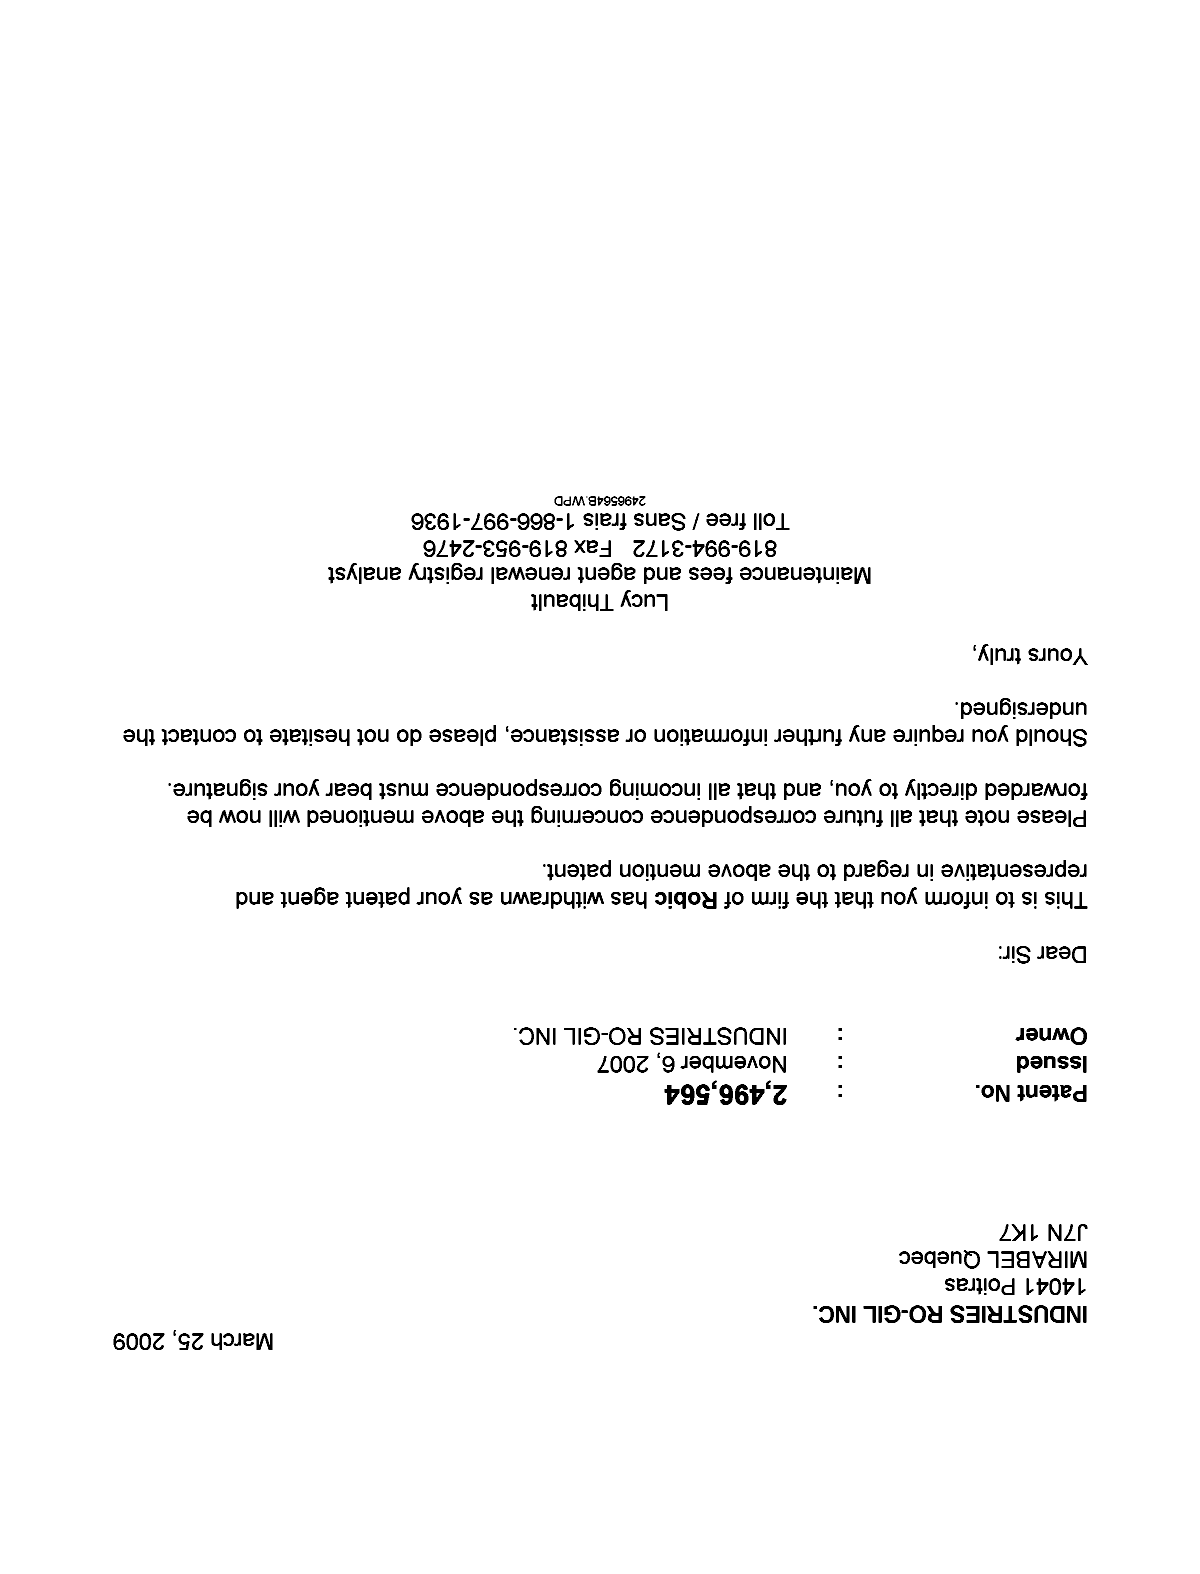 Canadian Patent Document 2496564. Correspondence 20081225. Image 1 of 1